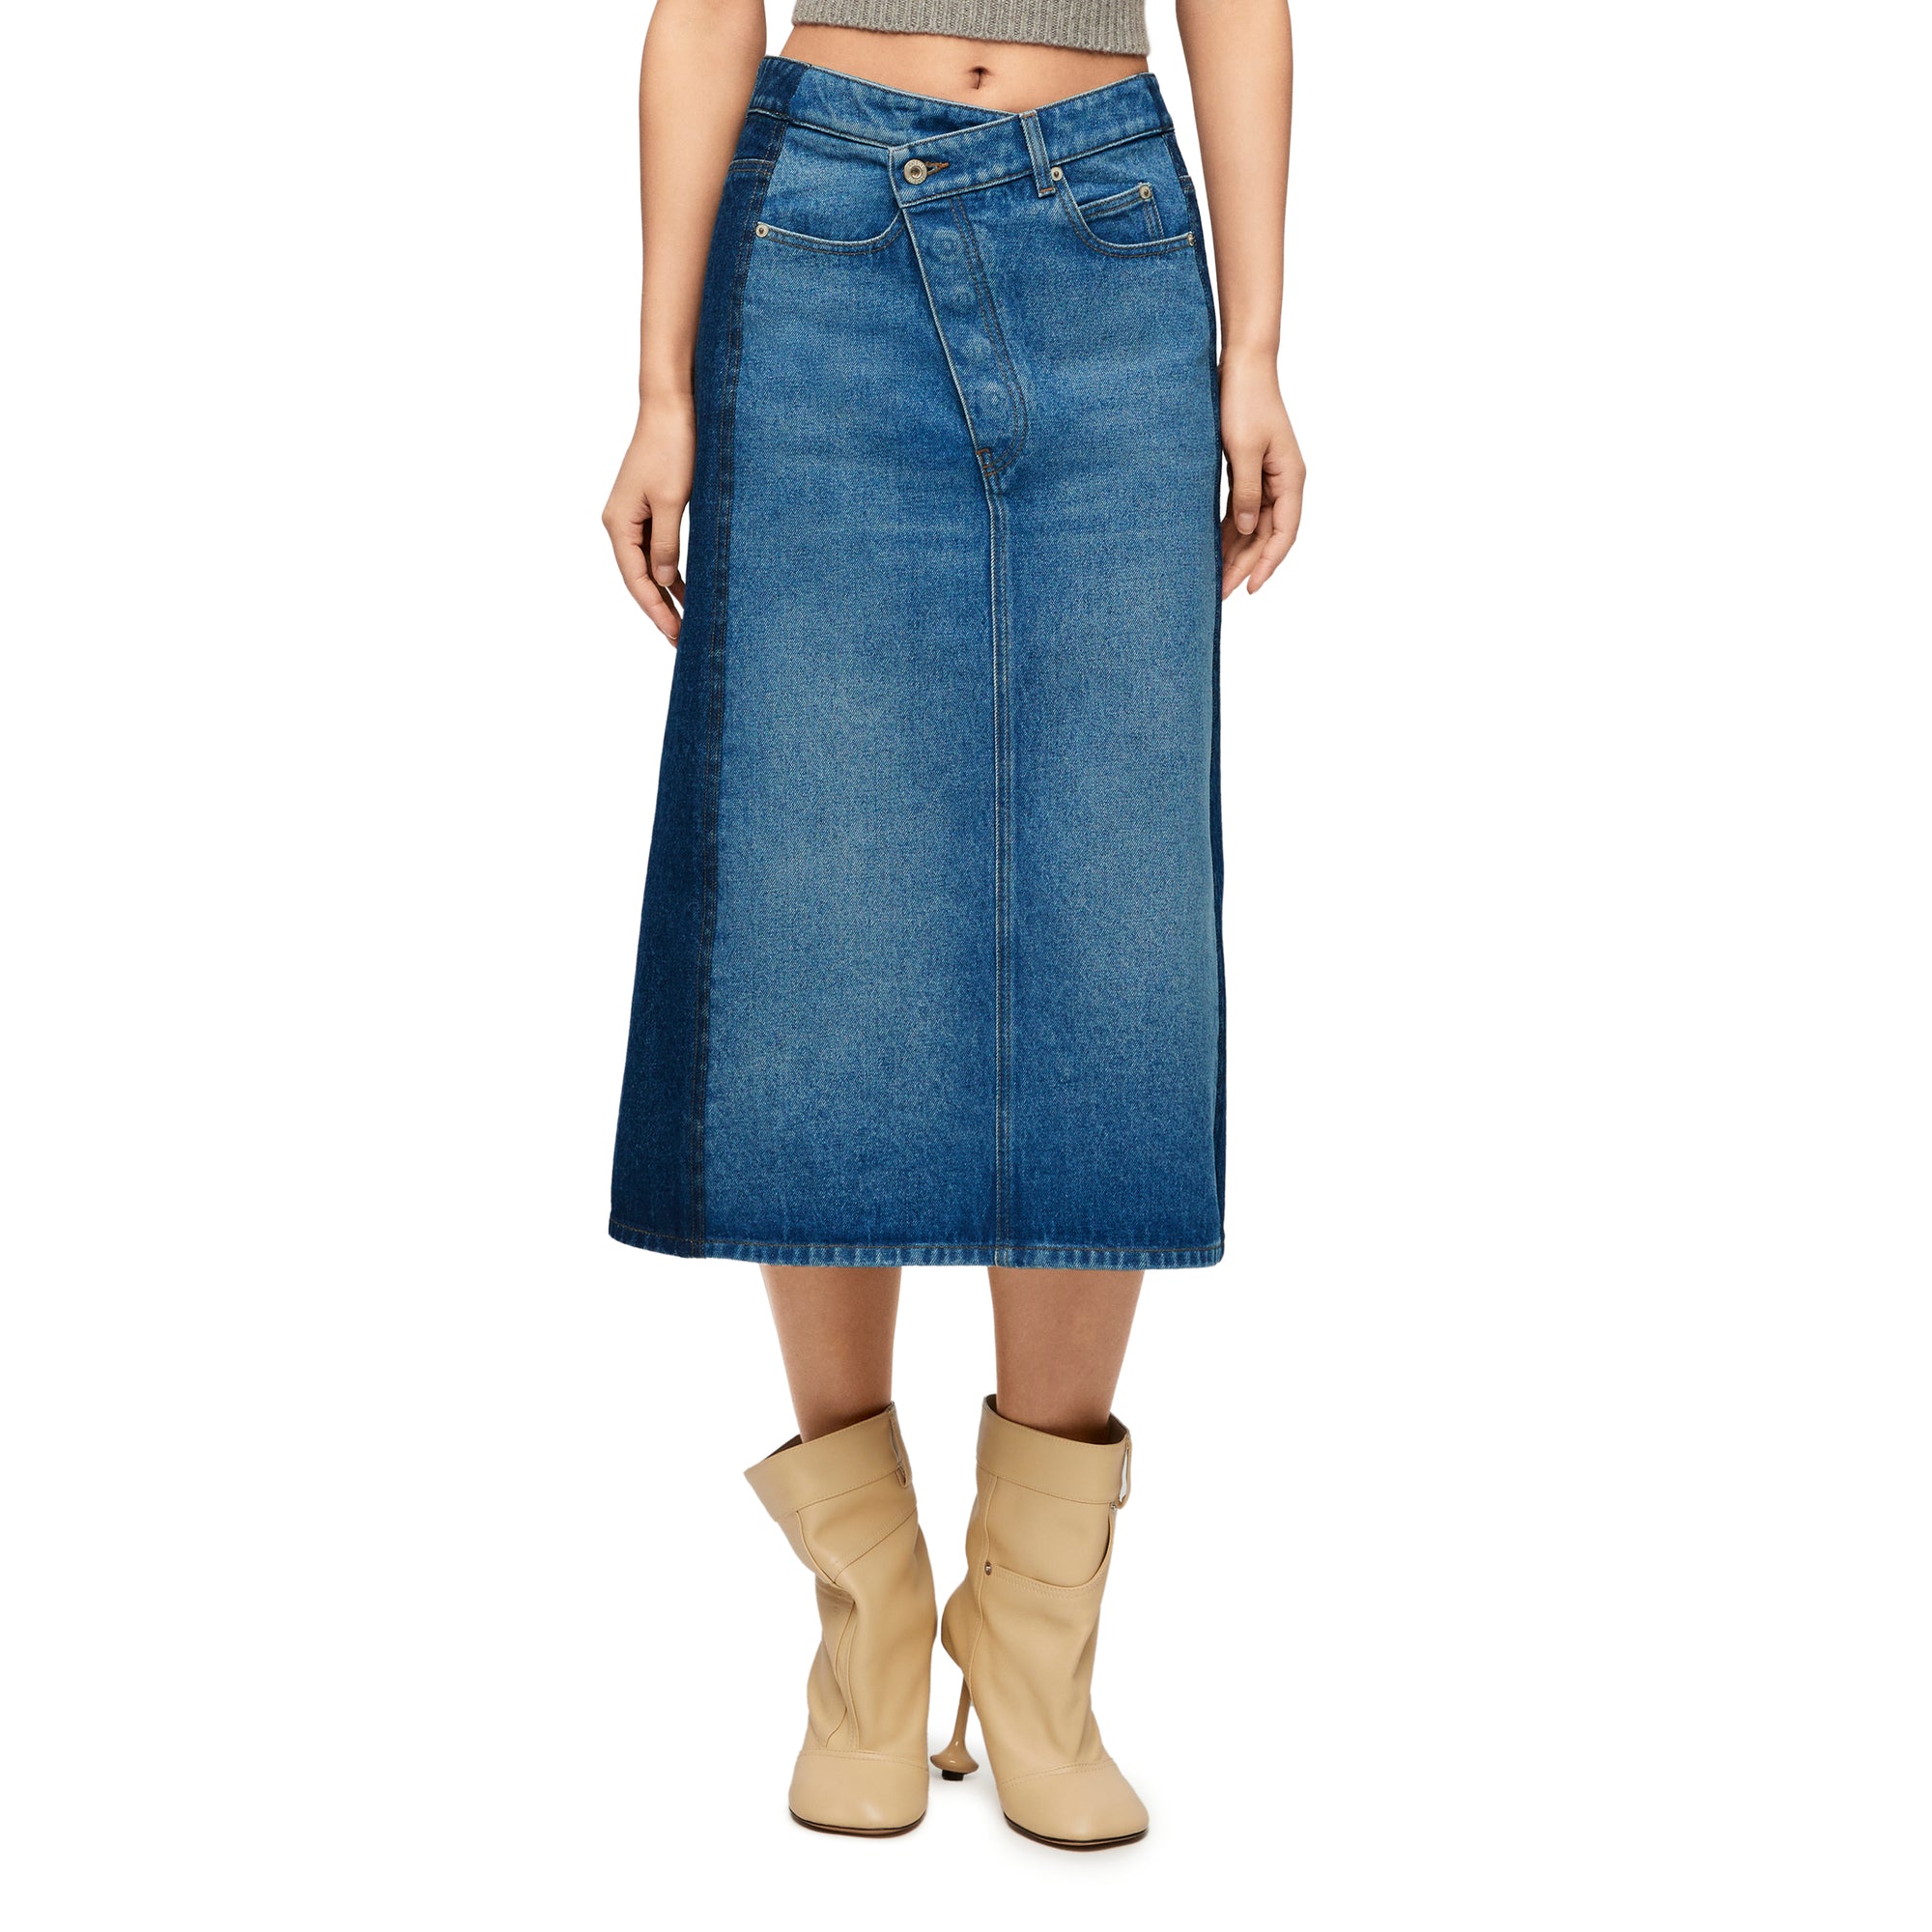 Loewe - Women’s Deconstructed Skirt - (Denim Blue) view 4